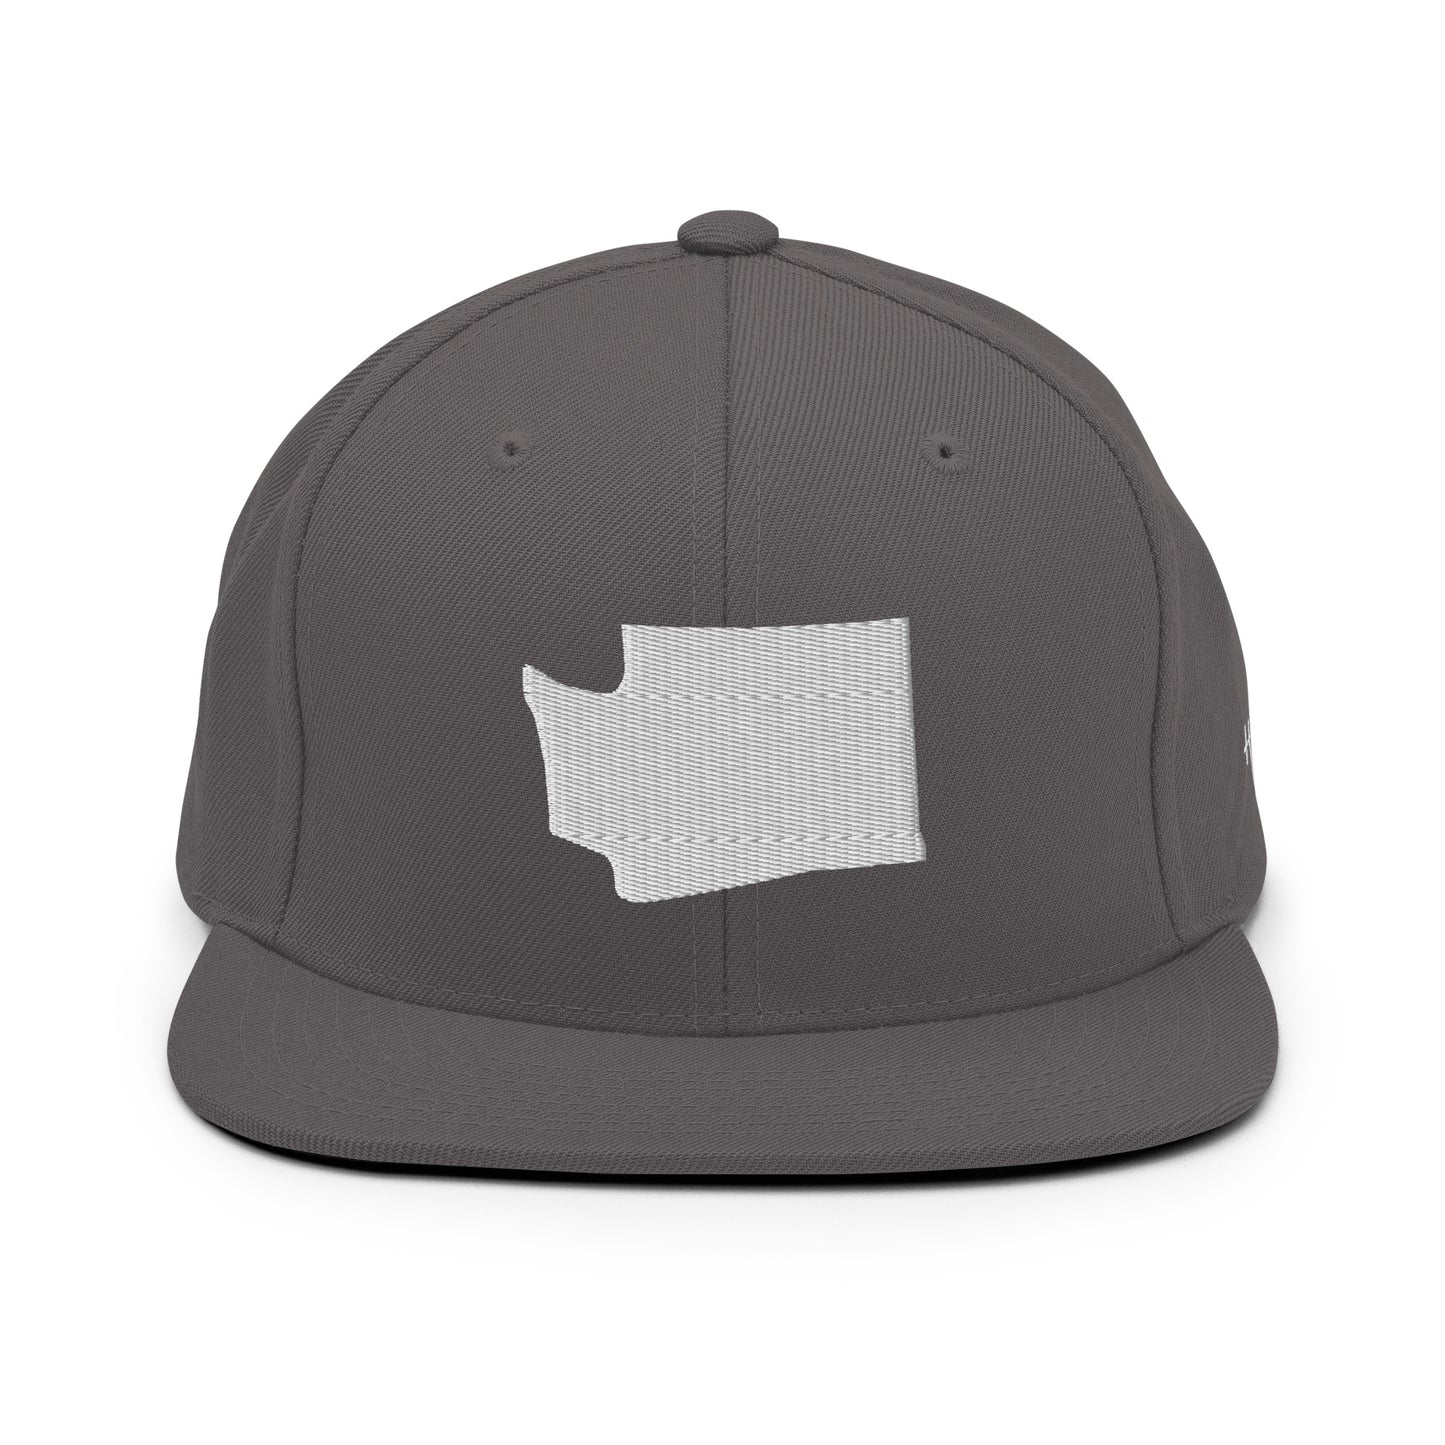 Washington State Silhouette 6 Panel Snapback Hat